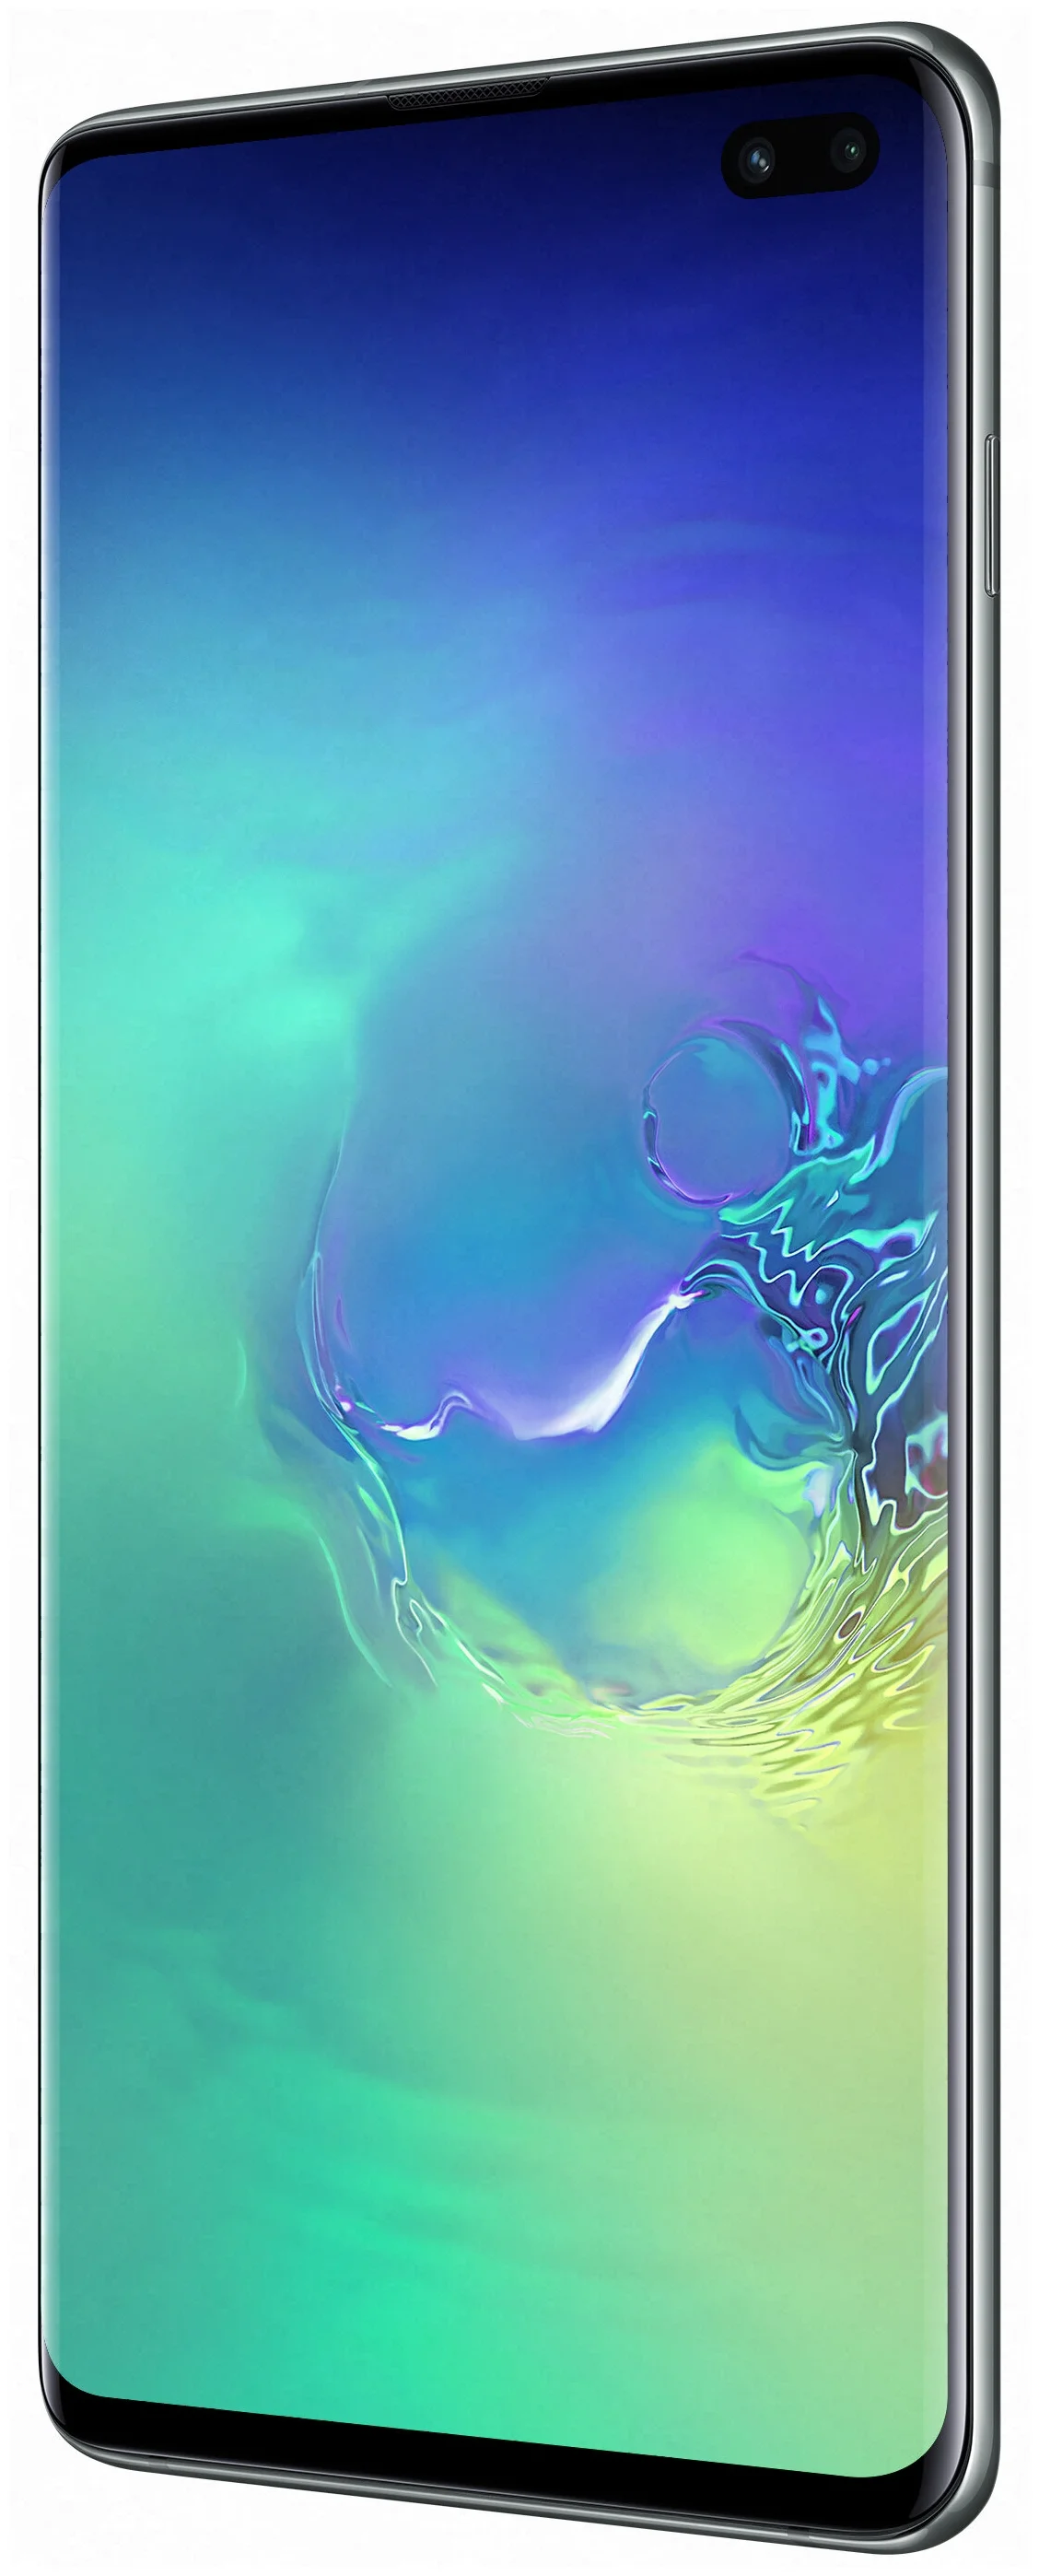 Samsung Galaxy S10+ 8/128GB - аккумулятор: 4100 мА·ч